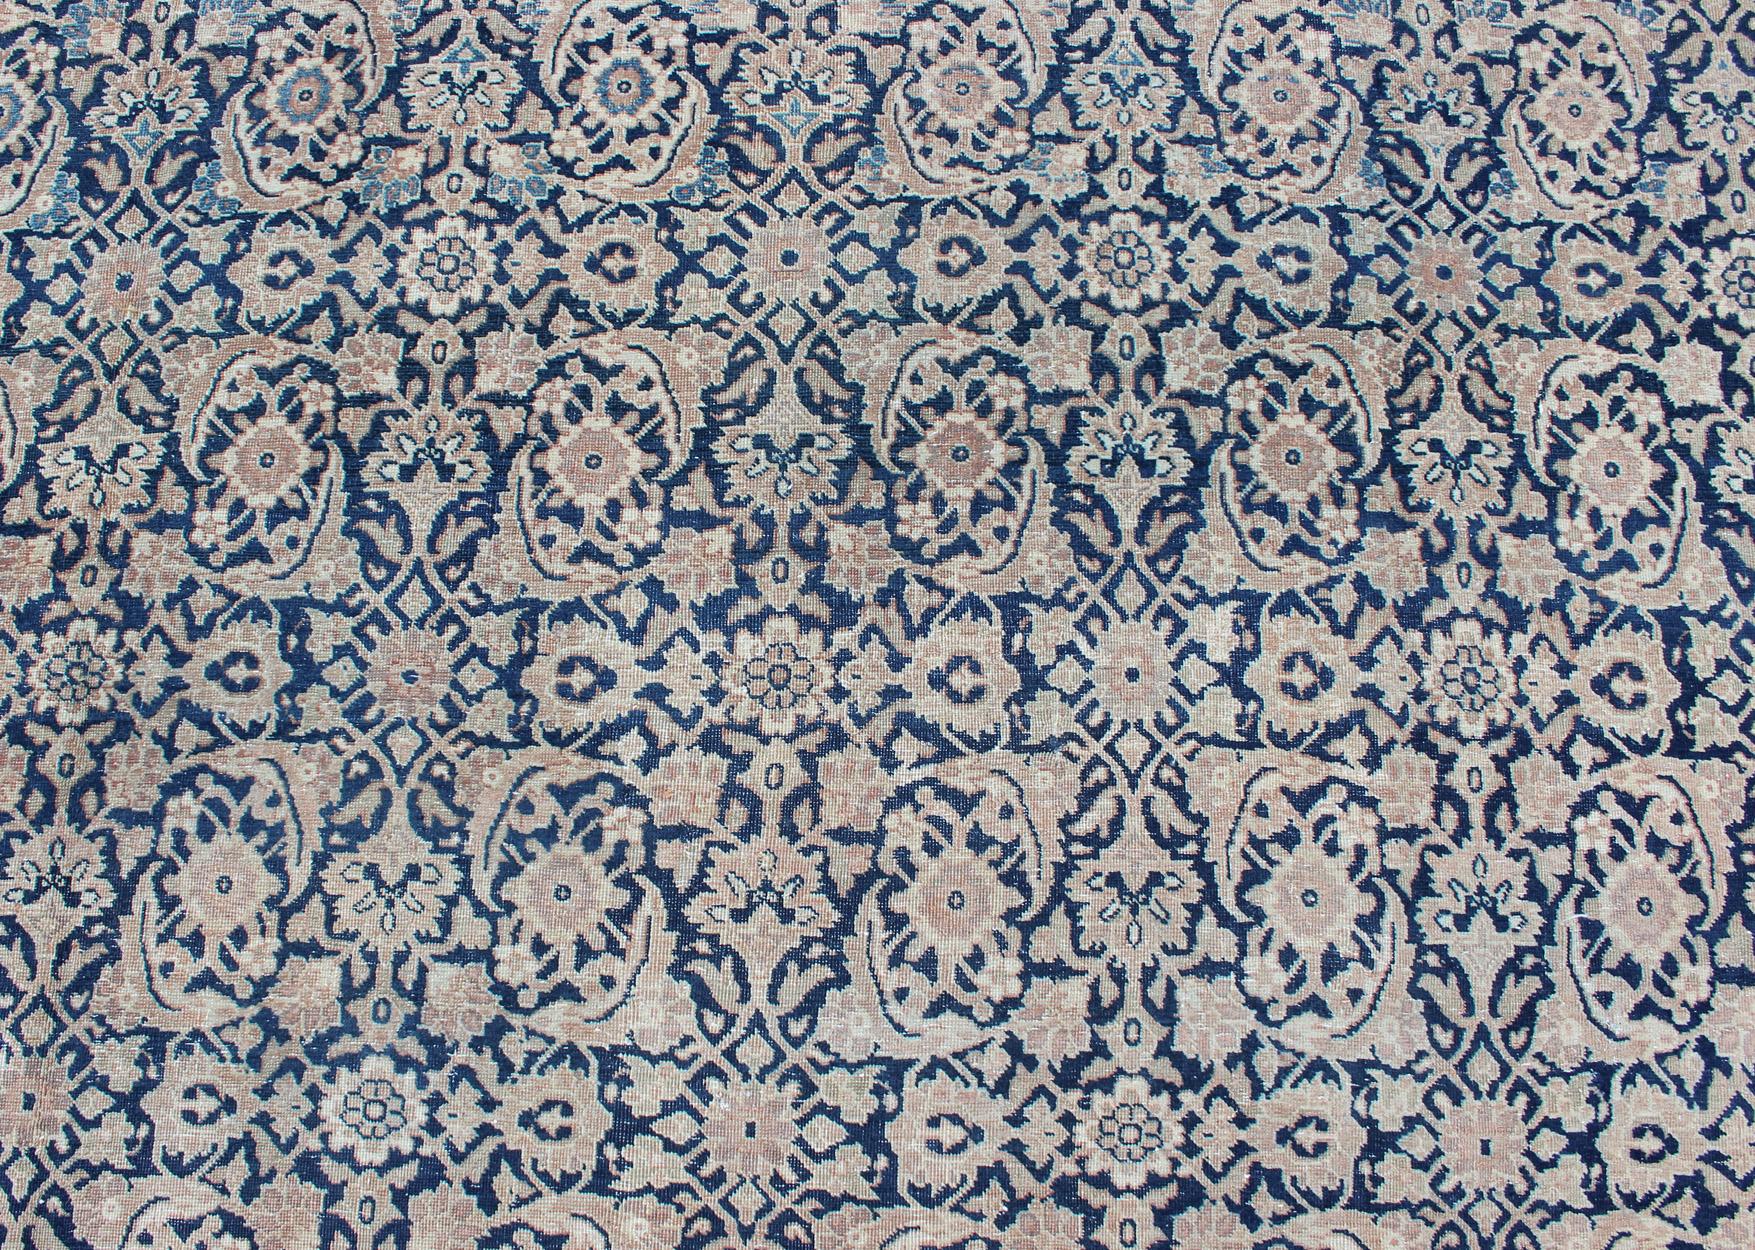 Antique Persian Tabriz Carpet with Geometric Herati Design in Dark Blue Tones For Sale 1